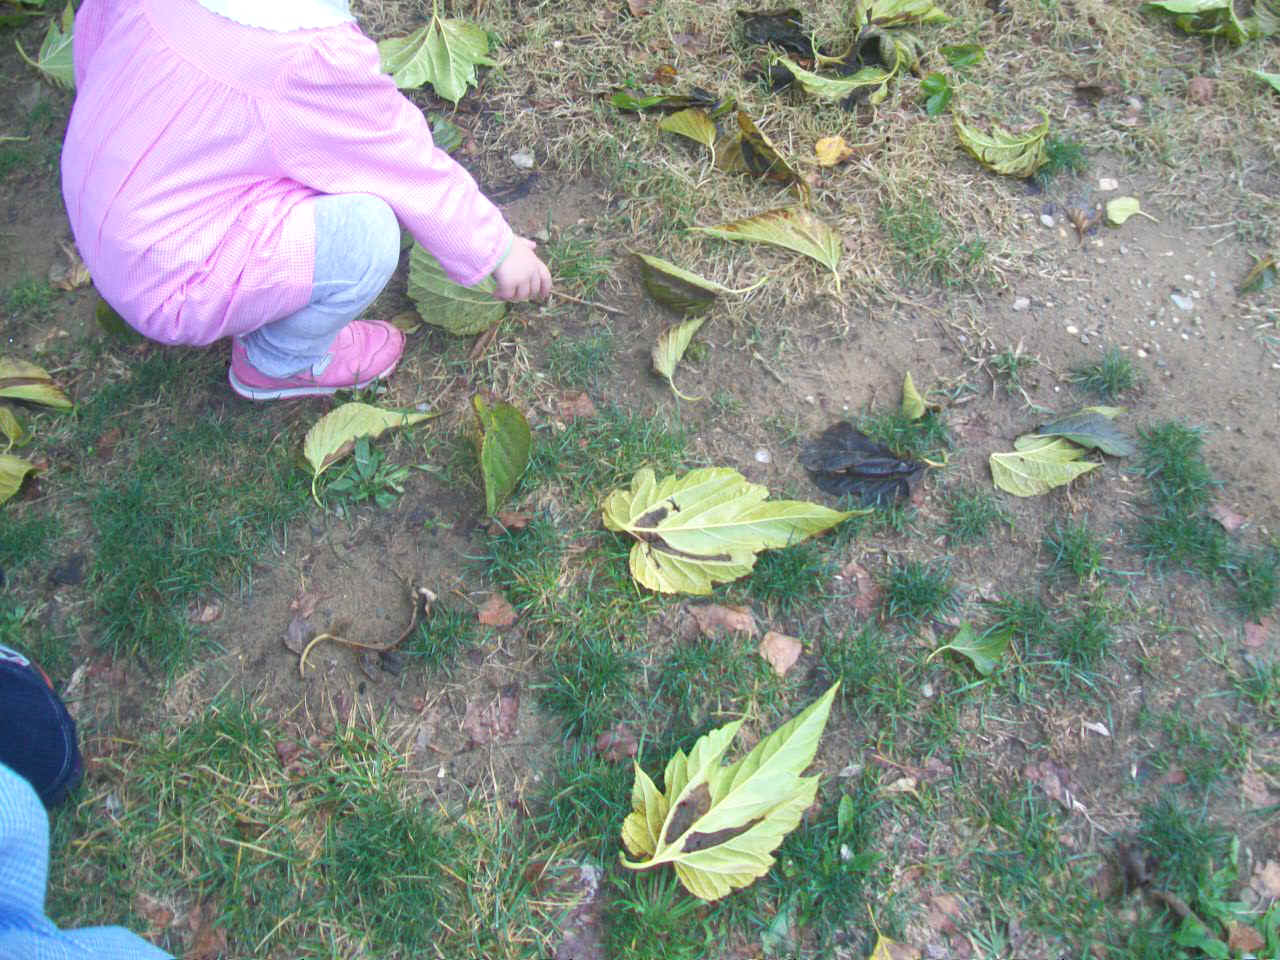 bambini che raccolgono le foglie dal giardino